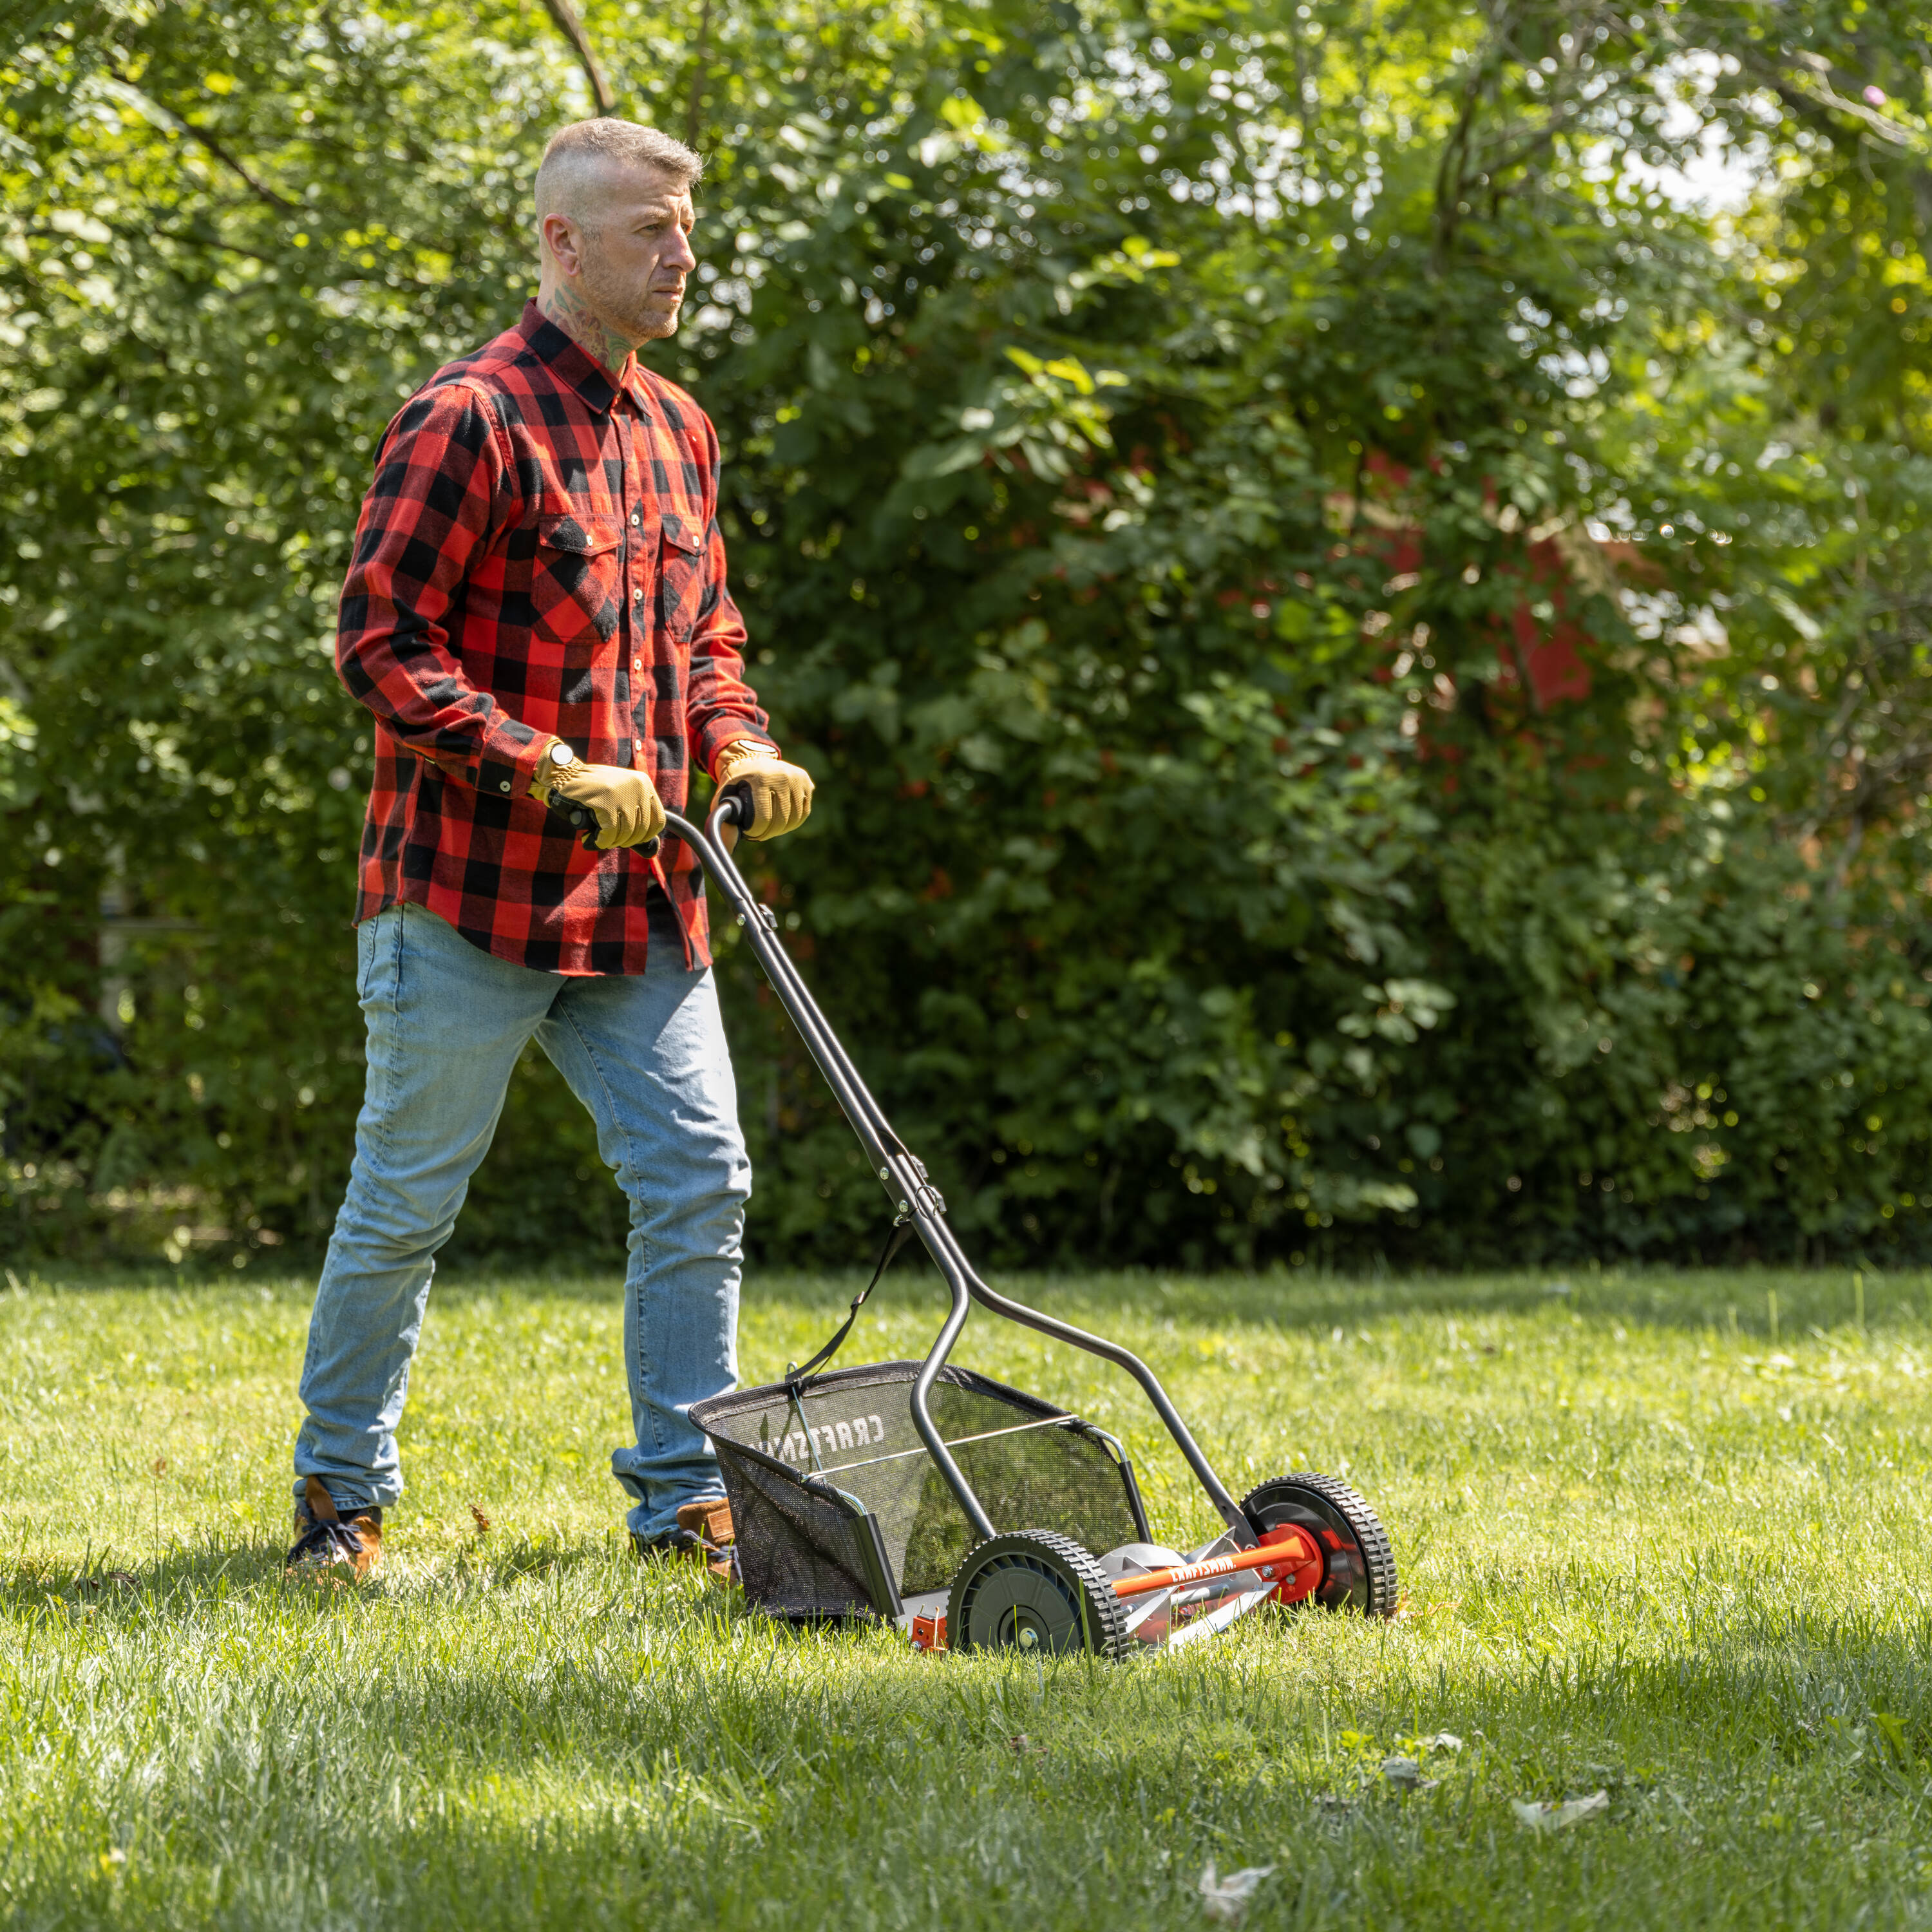 Greenworks 20-inch 5-Blade Push Reel Lawn Mower with Grass Catcher